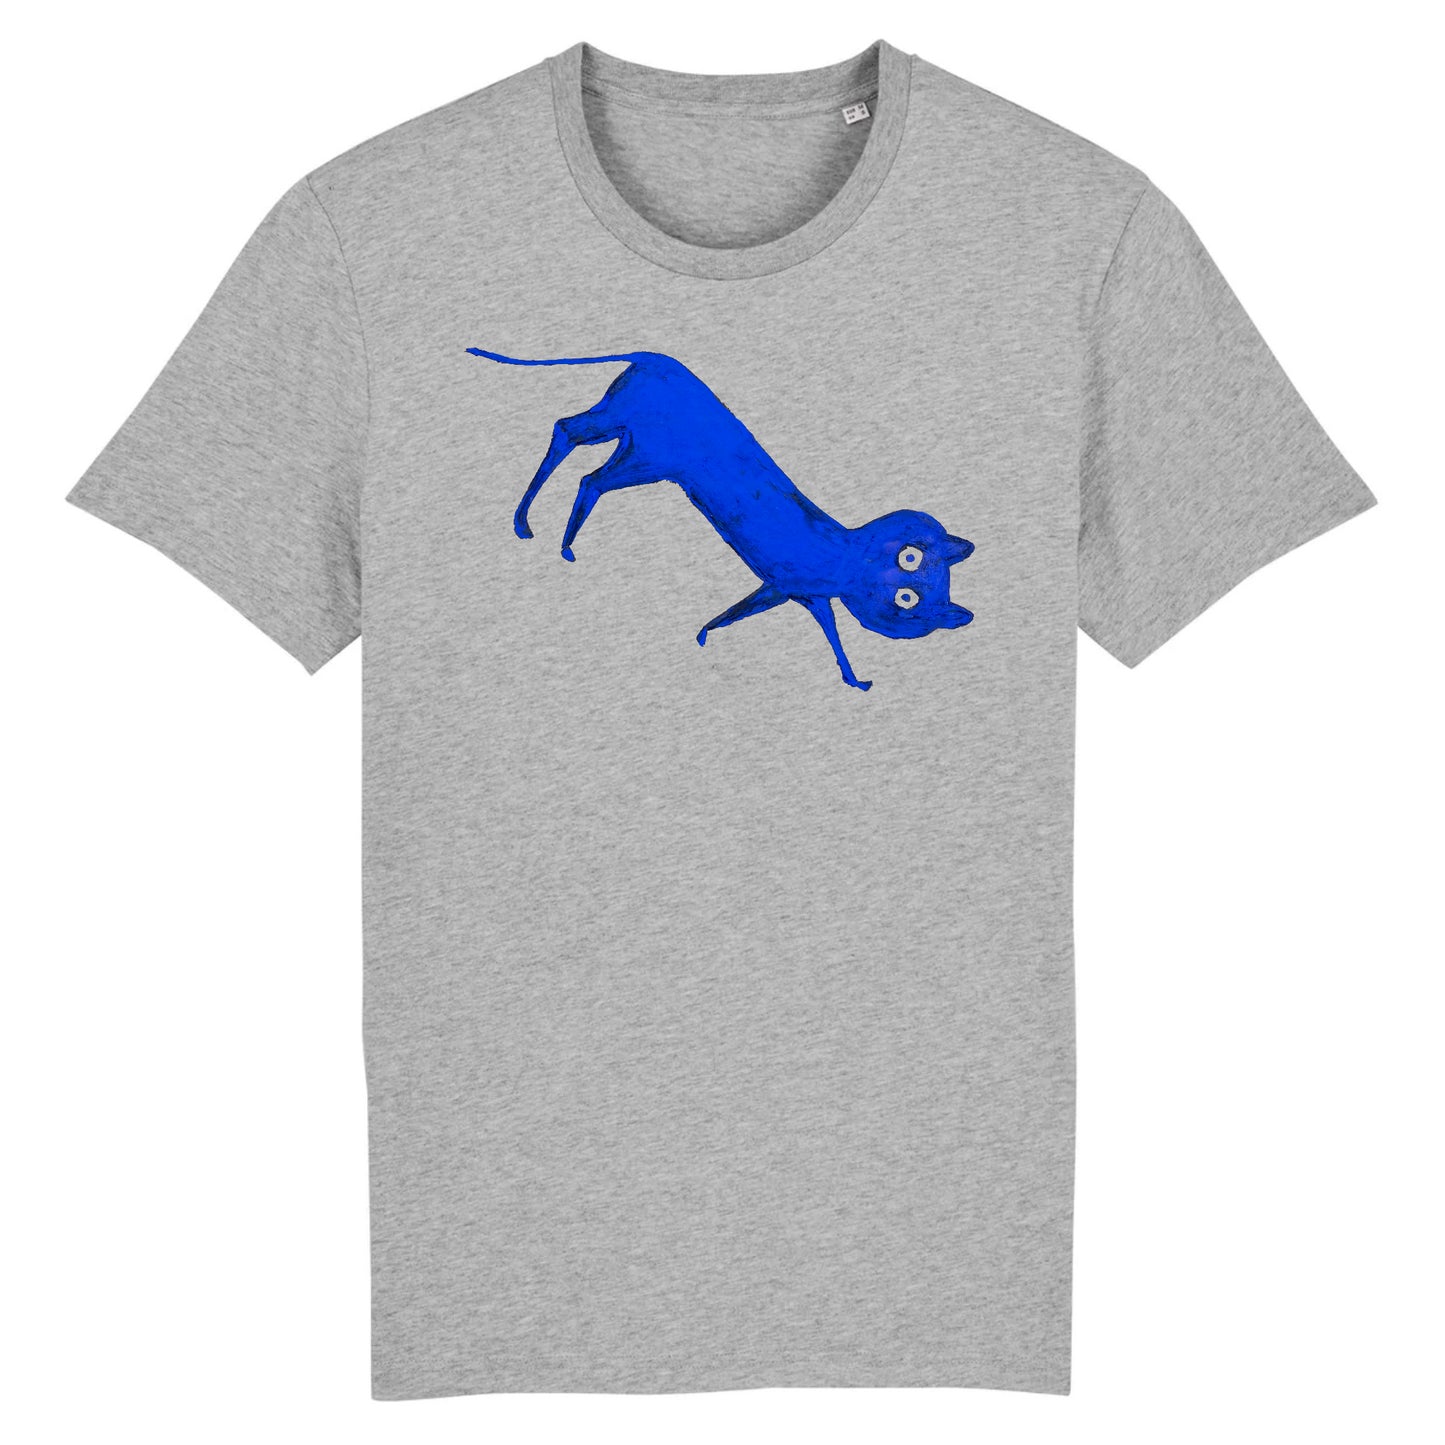 Blue Cat by Bill Traylor, c.1941 - Organic Cotton T-Shirt